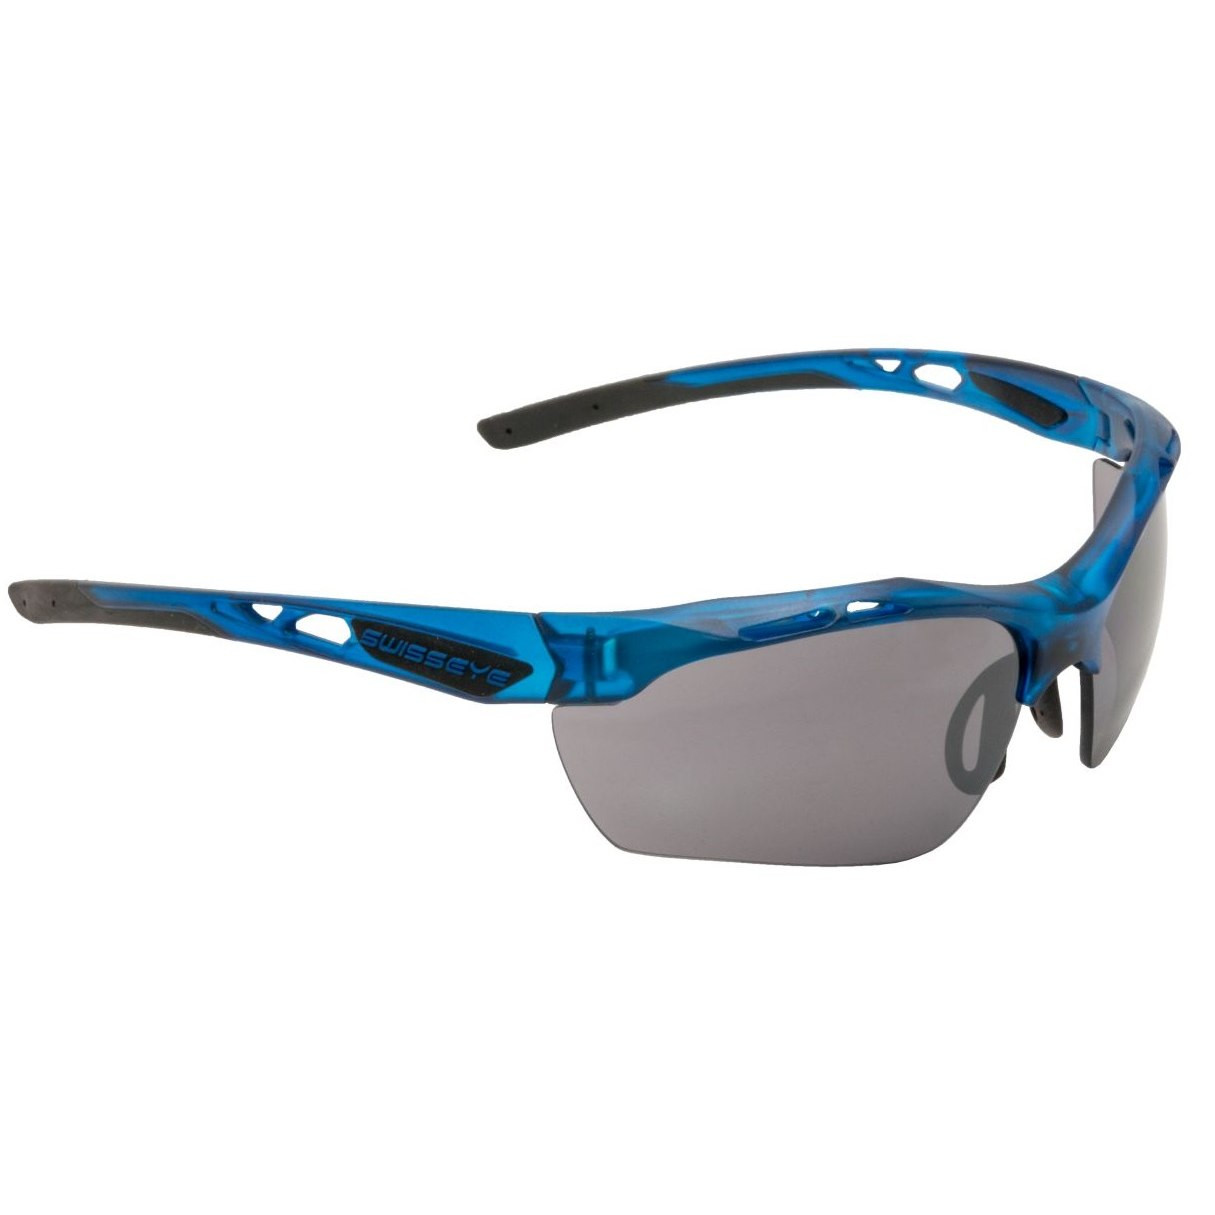 SWISS EYE Sunglasses NUCLEO Crystal Blue Matt/Black Lens Smoke FM (12822)